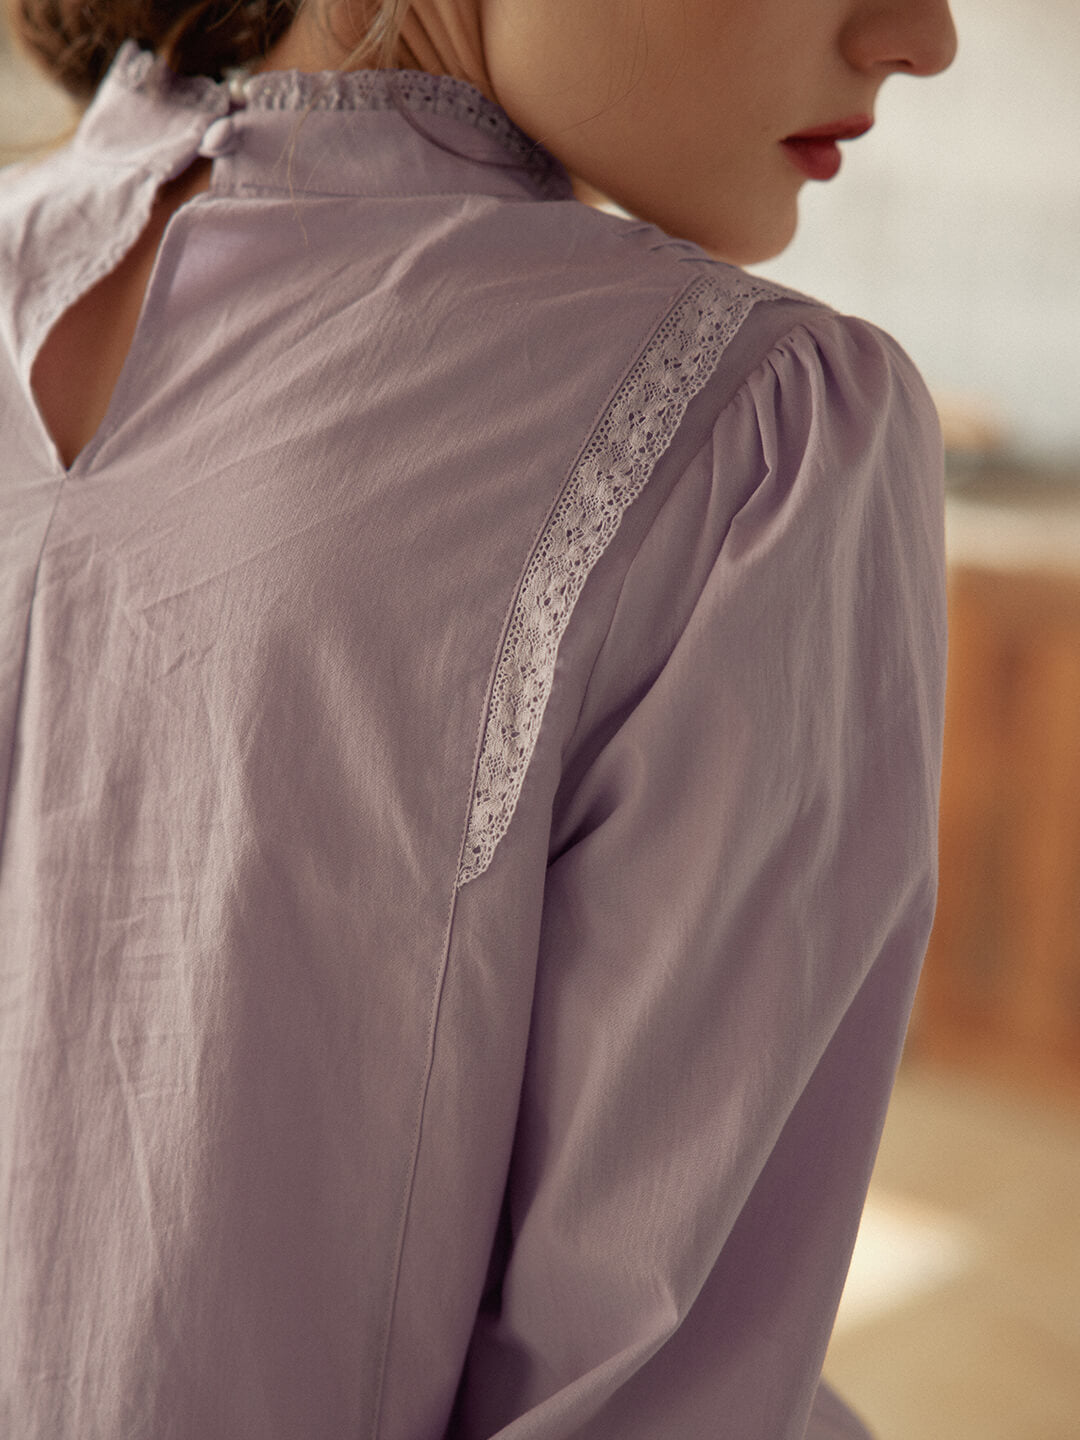 Paisley 紫色玫瑰刺繡蕾絲襯衫/SIMPLERETRO